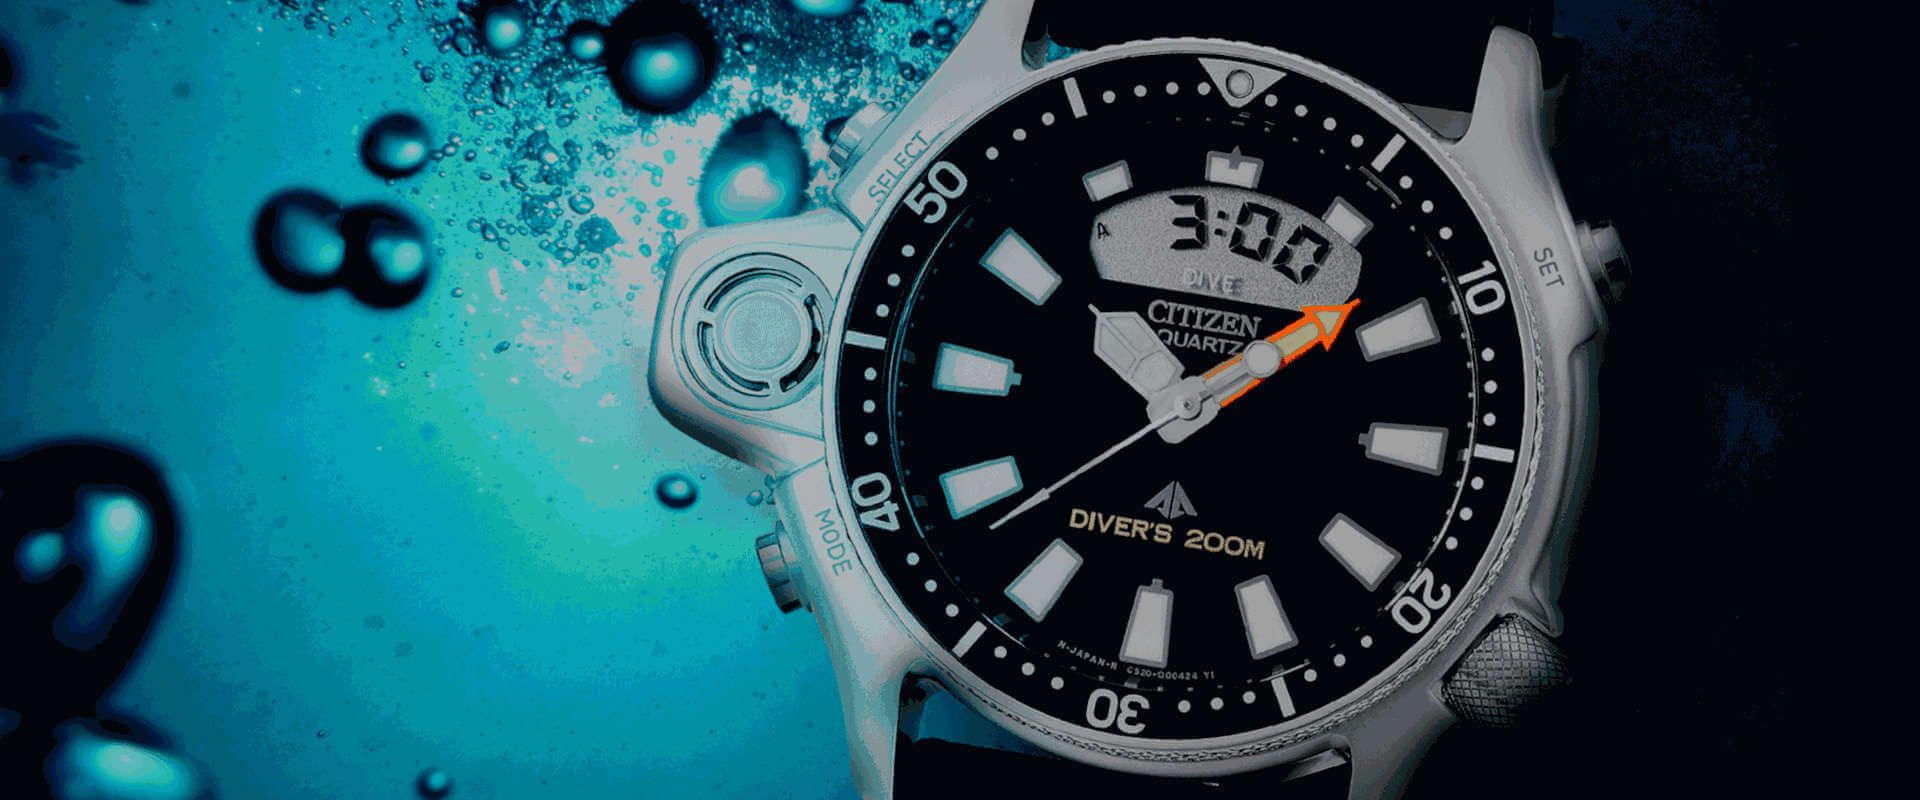 Citizen Diver's Watch